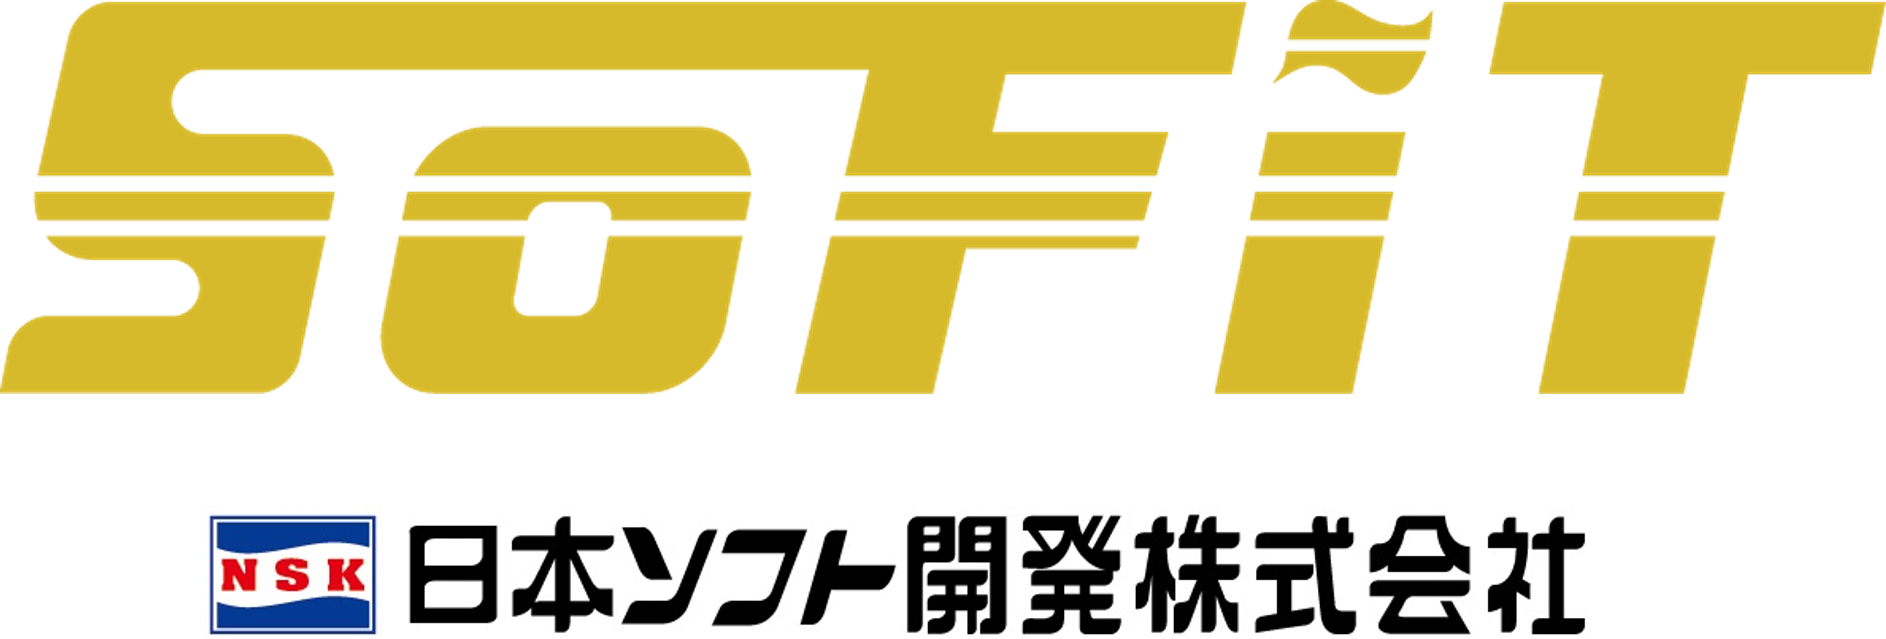 SOFIT_NSK_logo.png